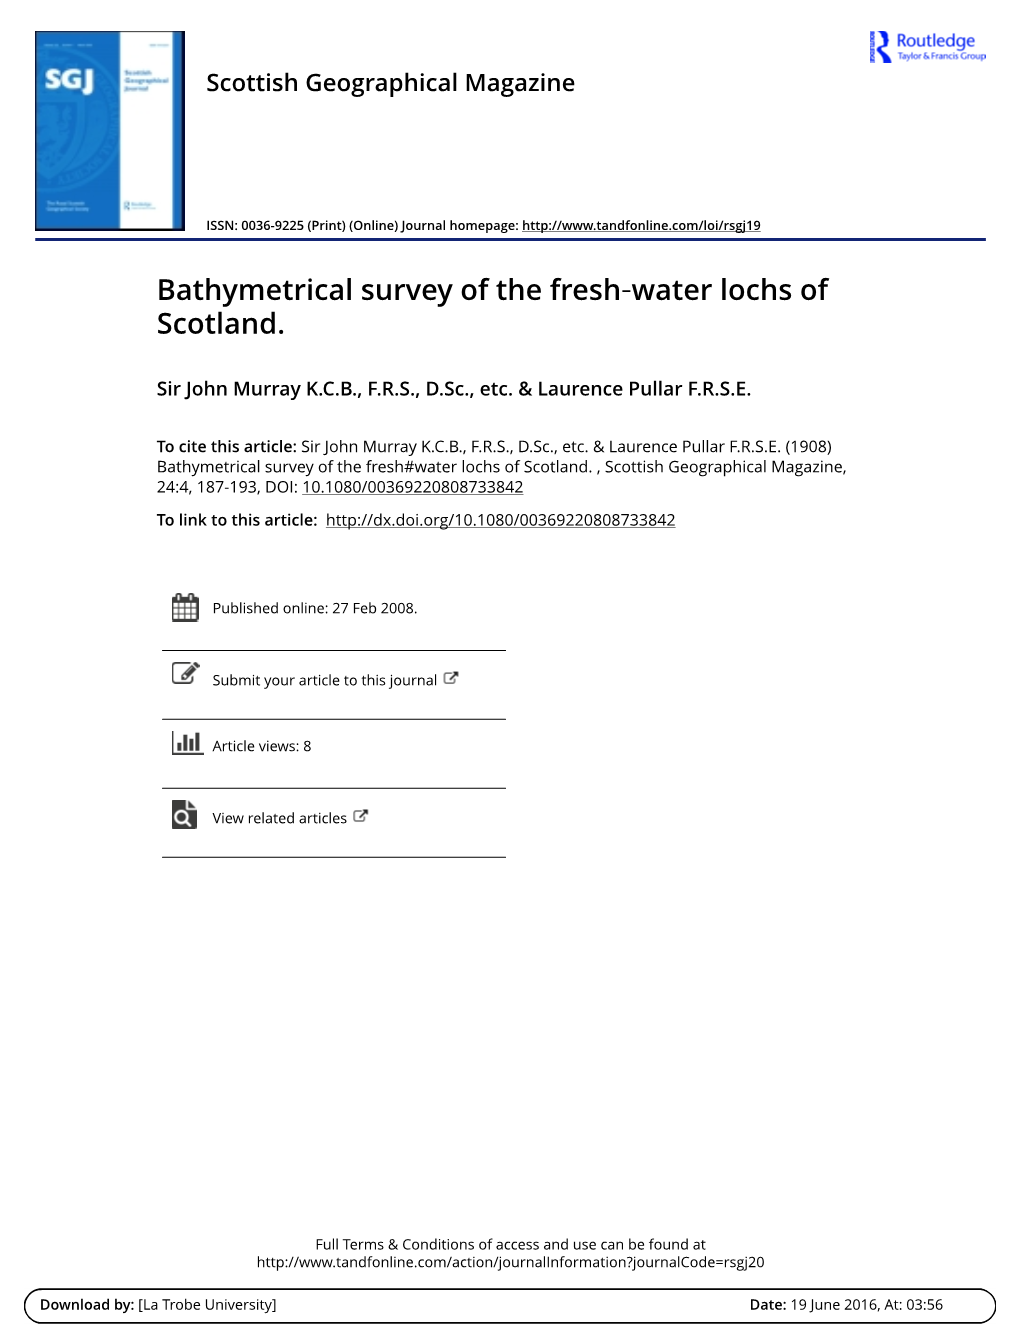 Bathymetrical Survey of the Fresh‐Water Lochs of Scotland